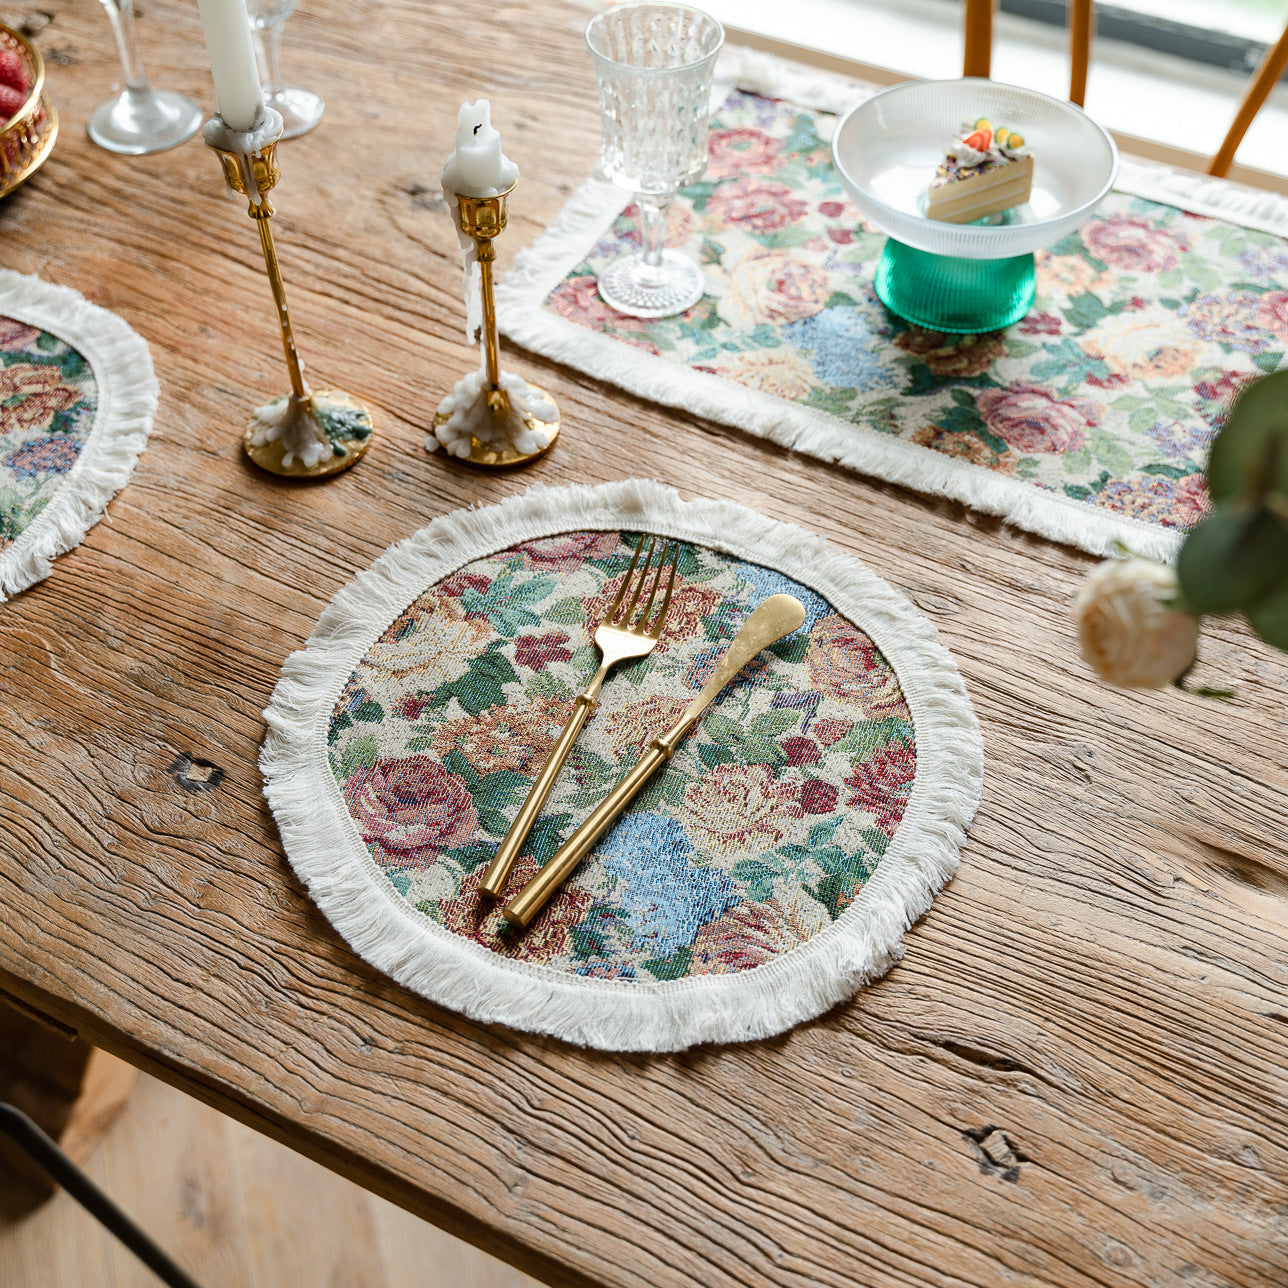 Vintage fringed dining room decorative tablecloth